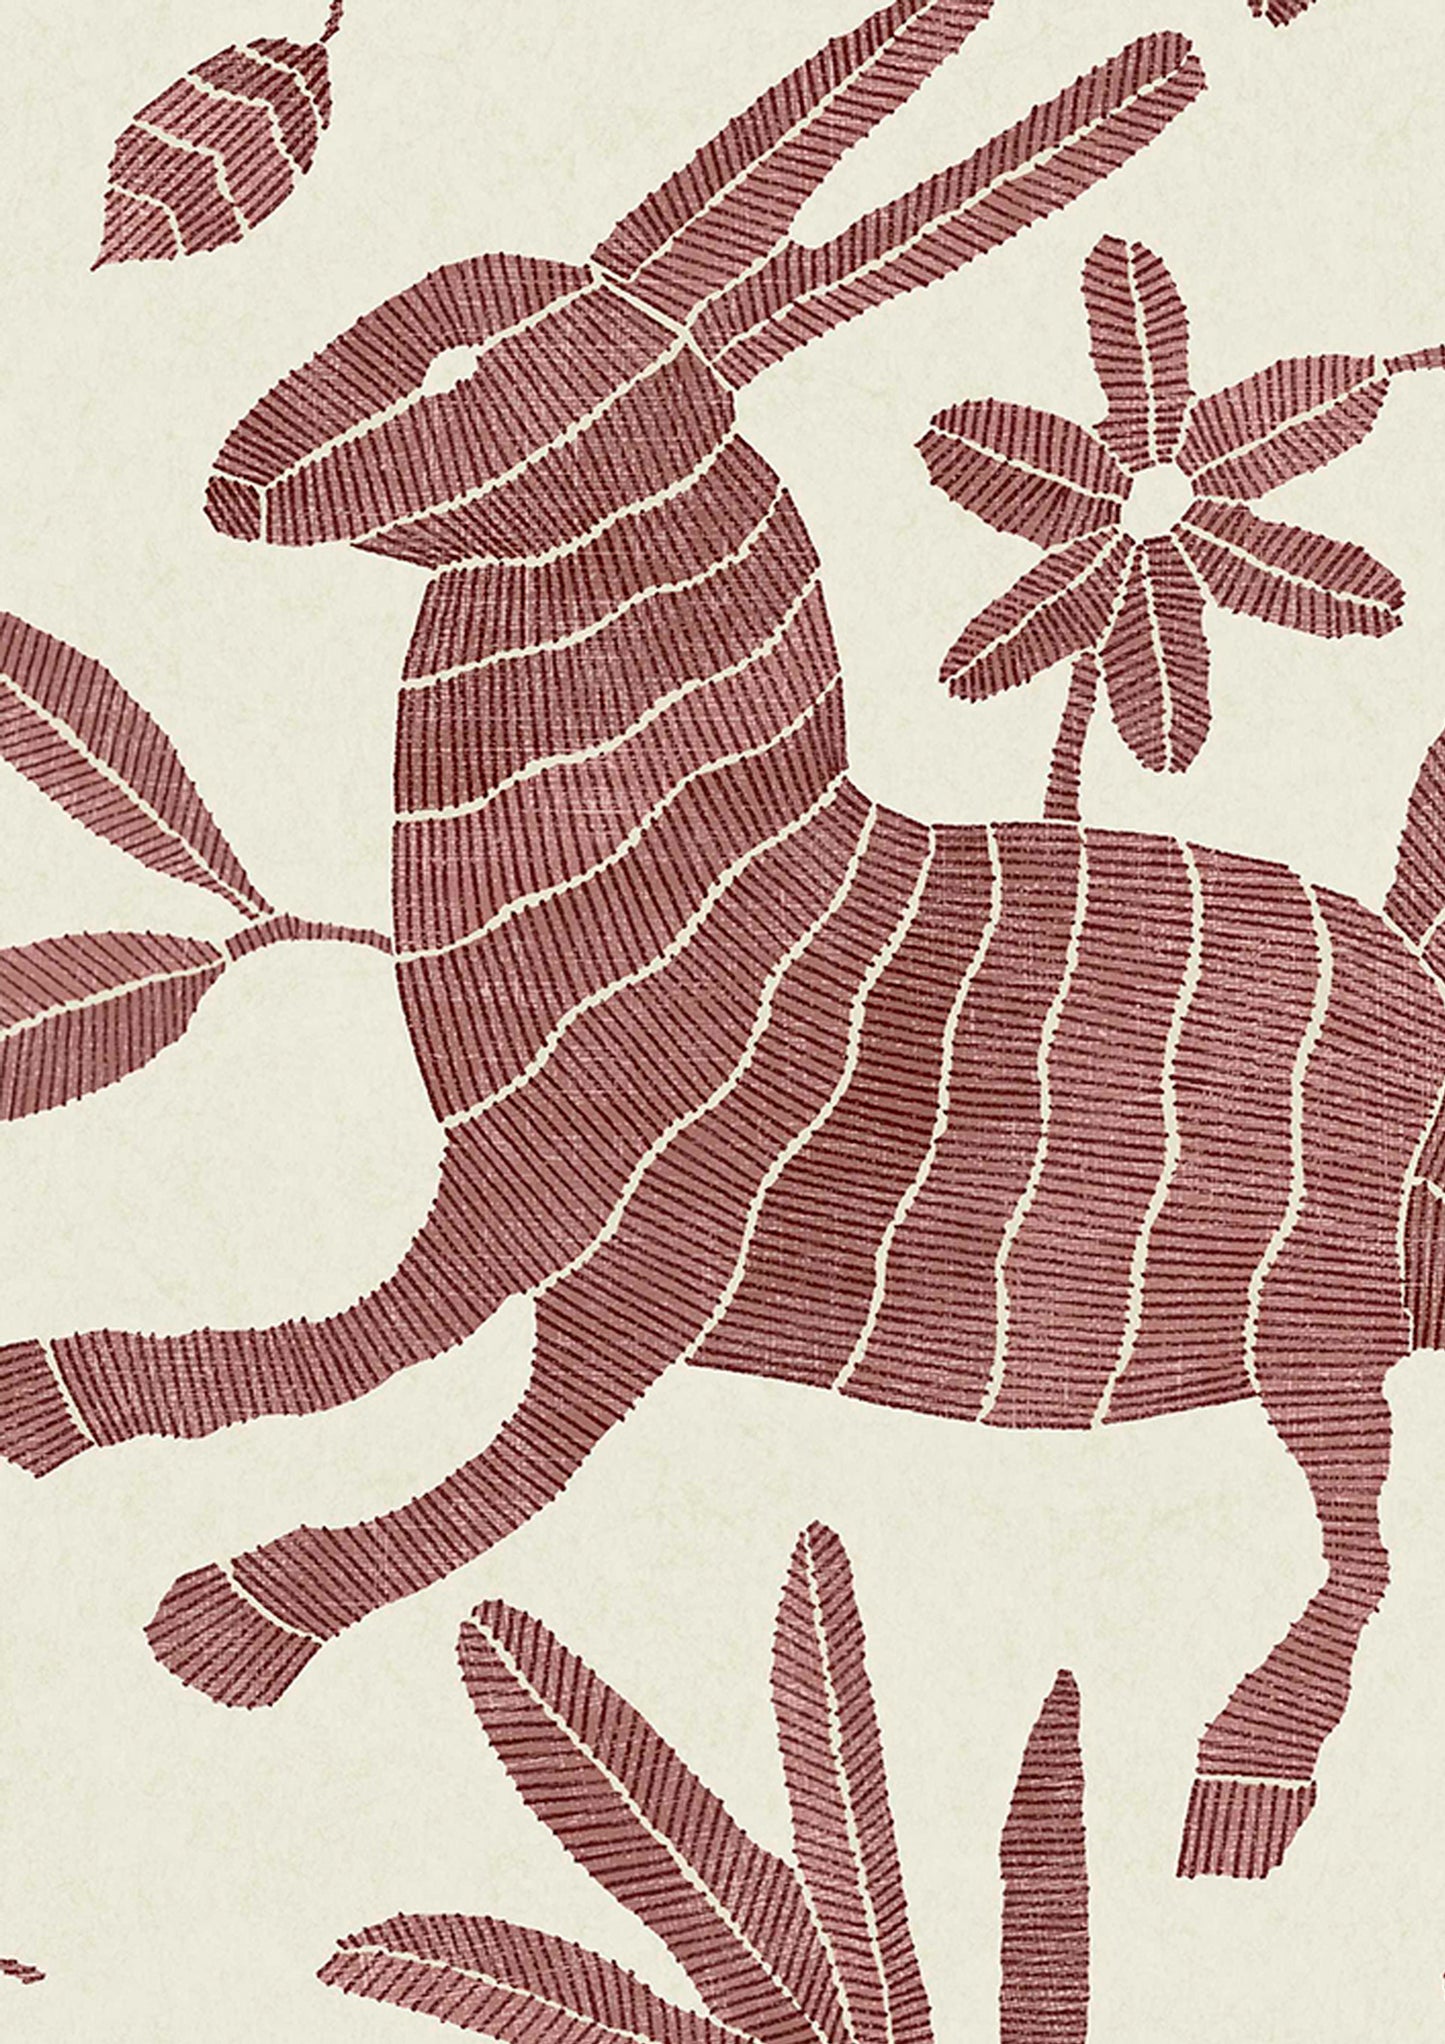 Otomi Rosy Wallpaper - Lewis & Wood